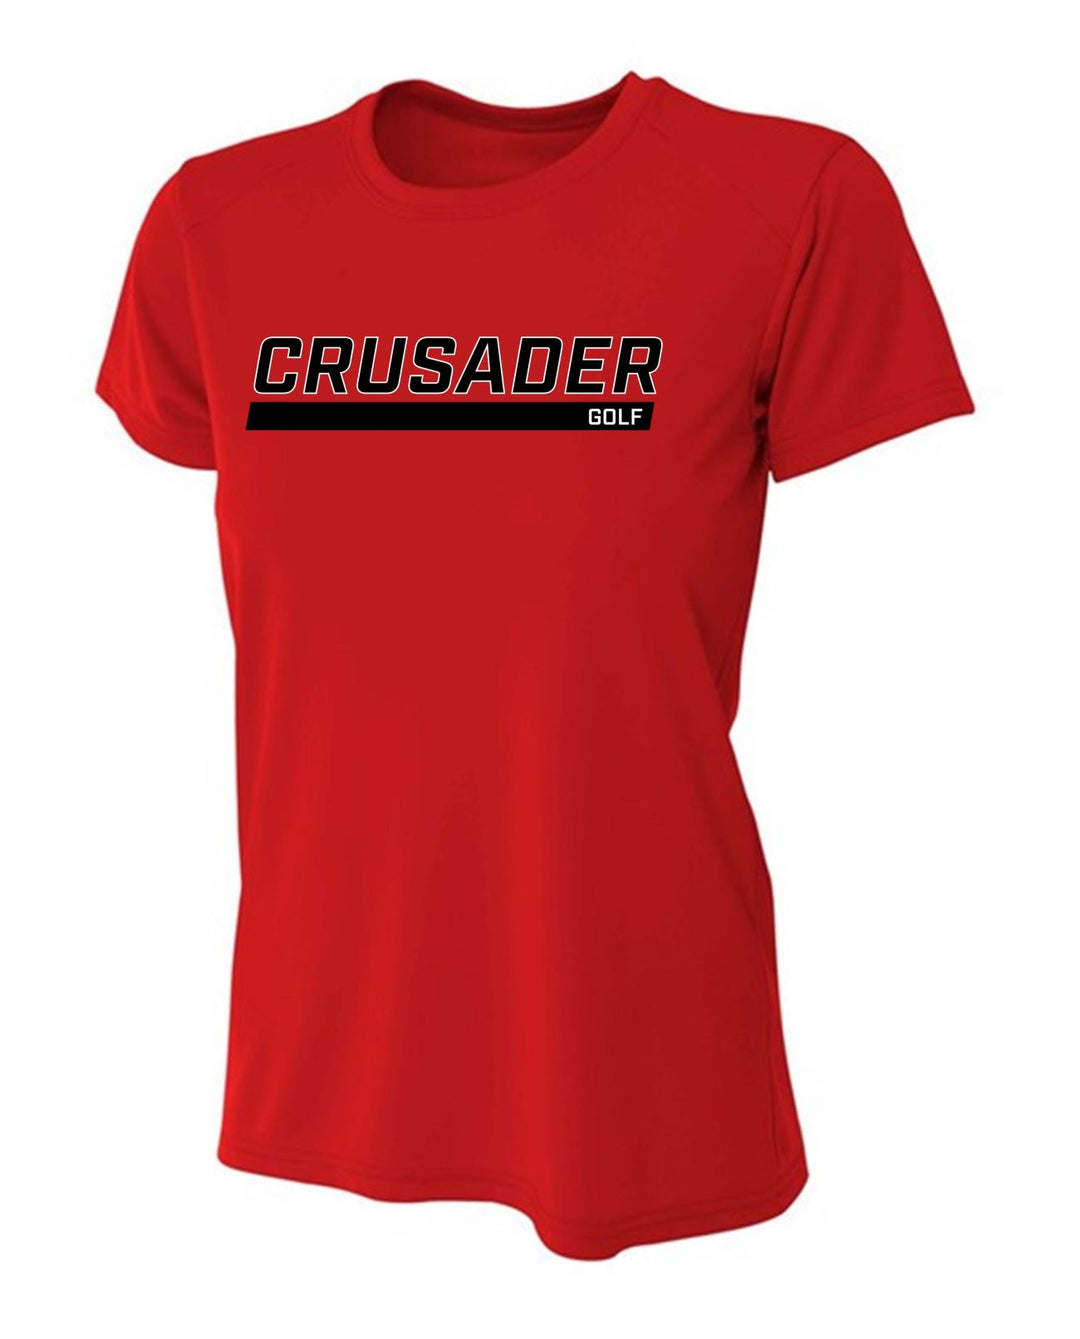 WCU Golf Women's Short-Sleeve Performance Shirt WCU Golf Red CRUSADER - Third Coast Soccer